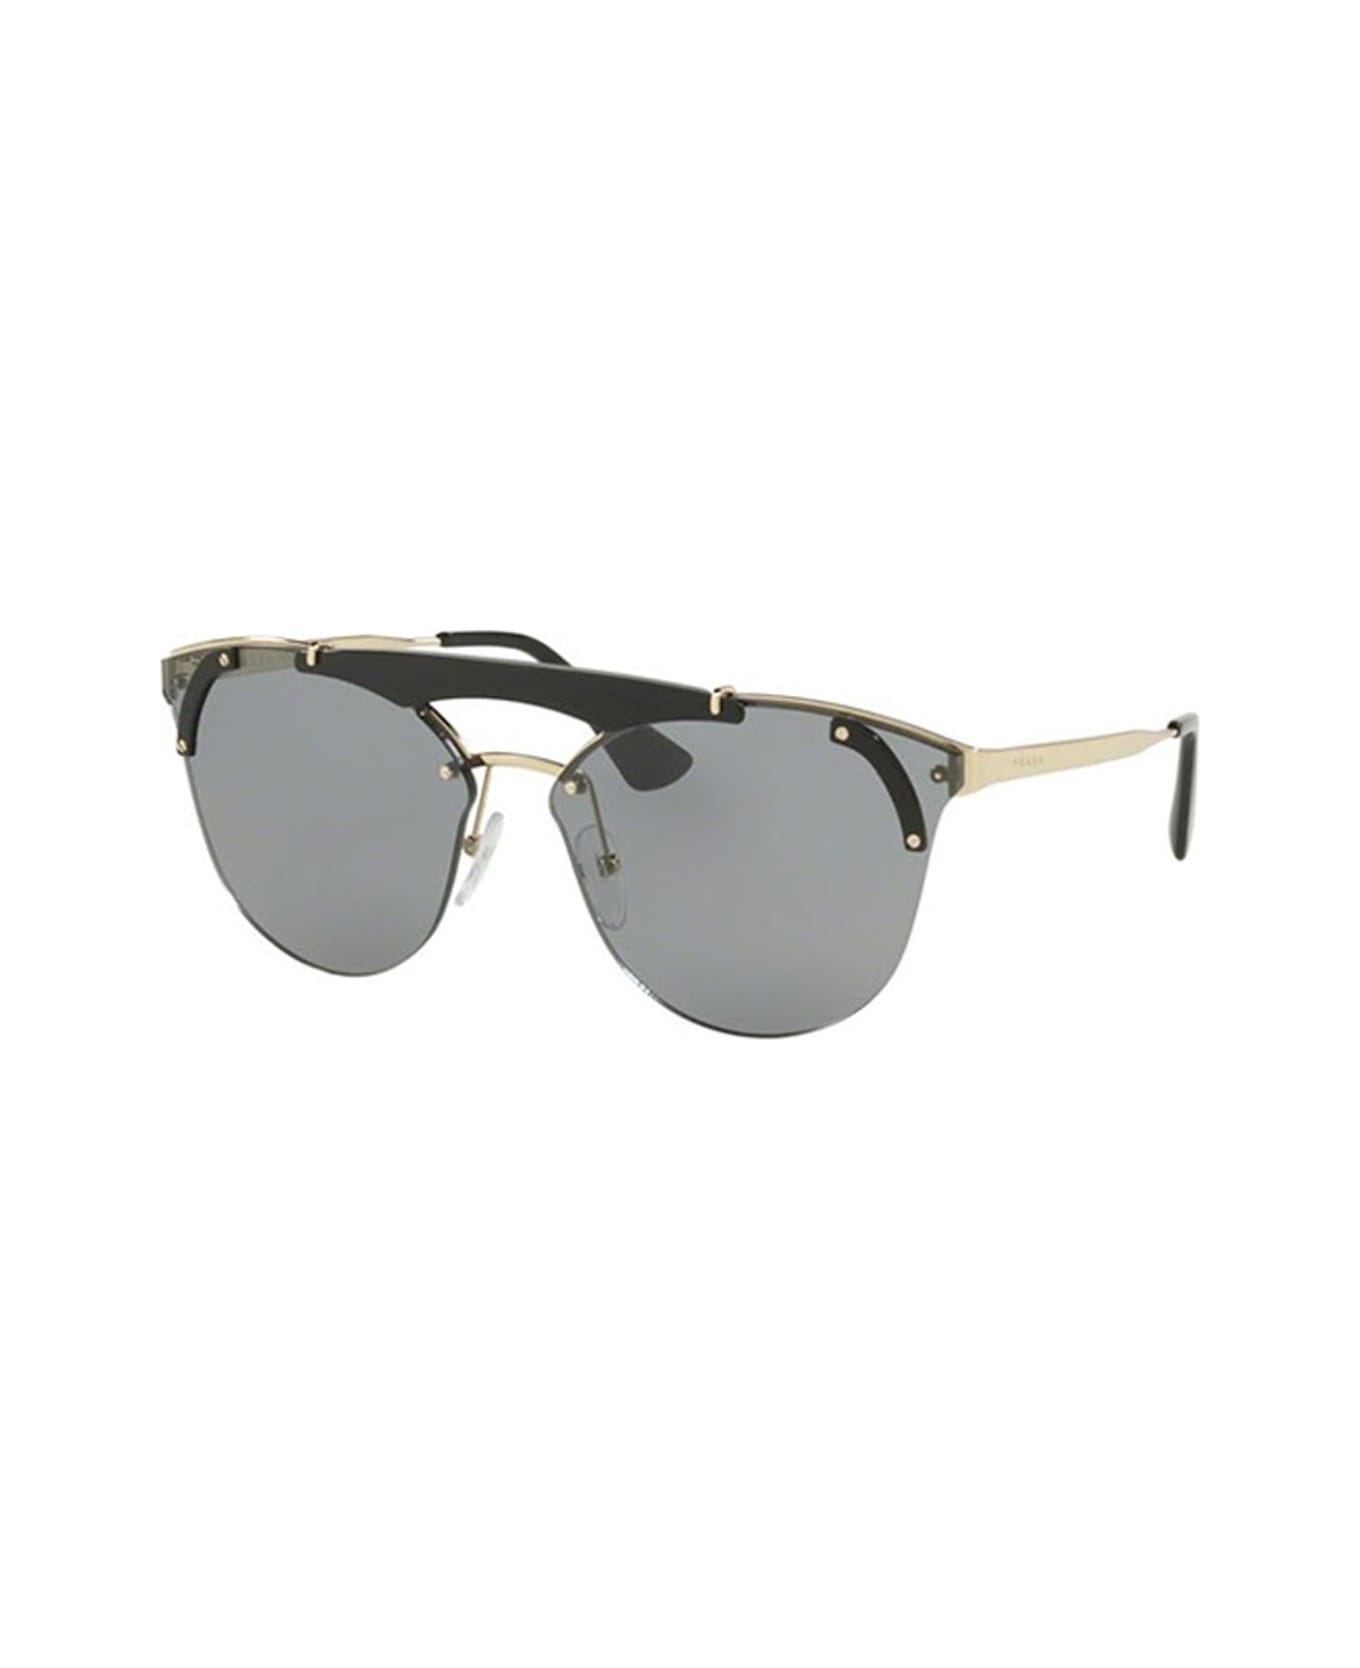 Prada Eyewear Pr 53us Sunglasses - Beige